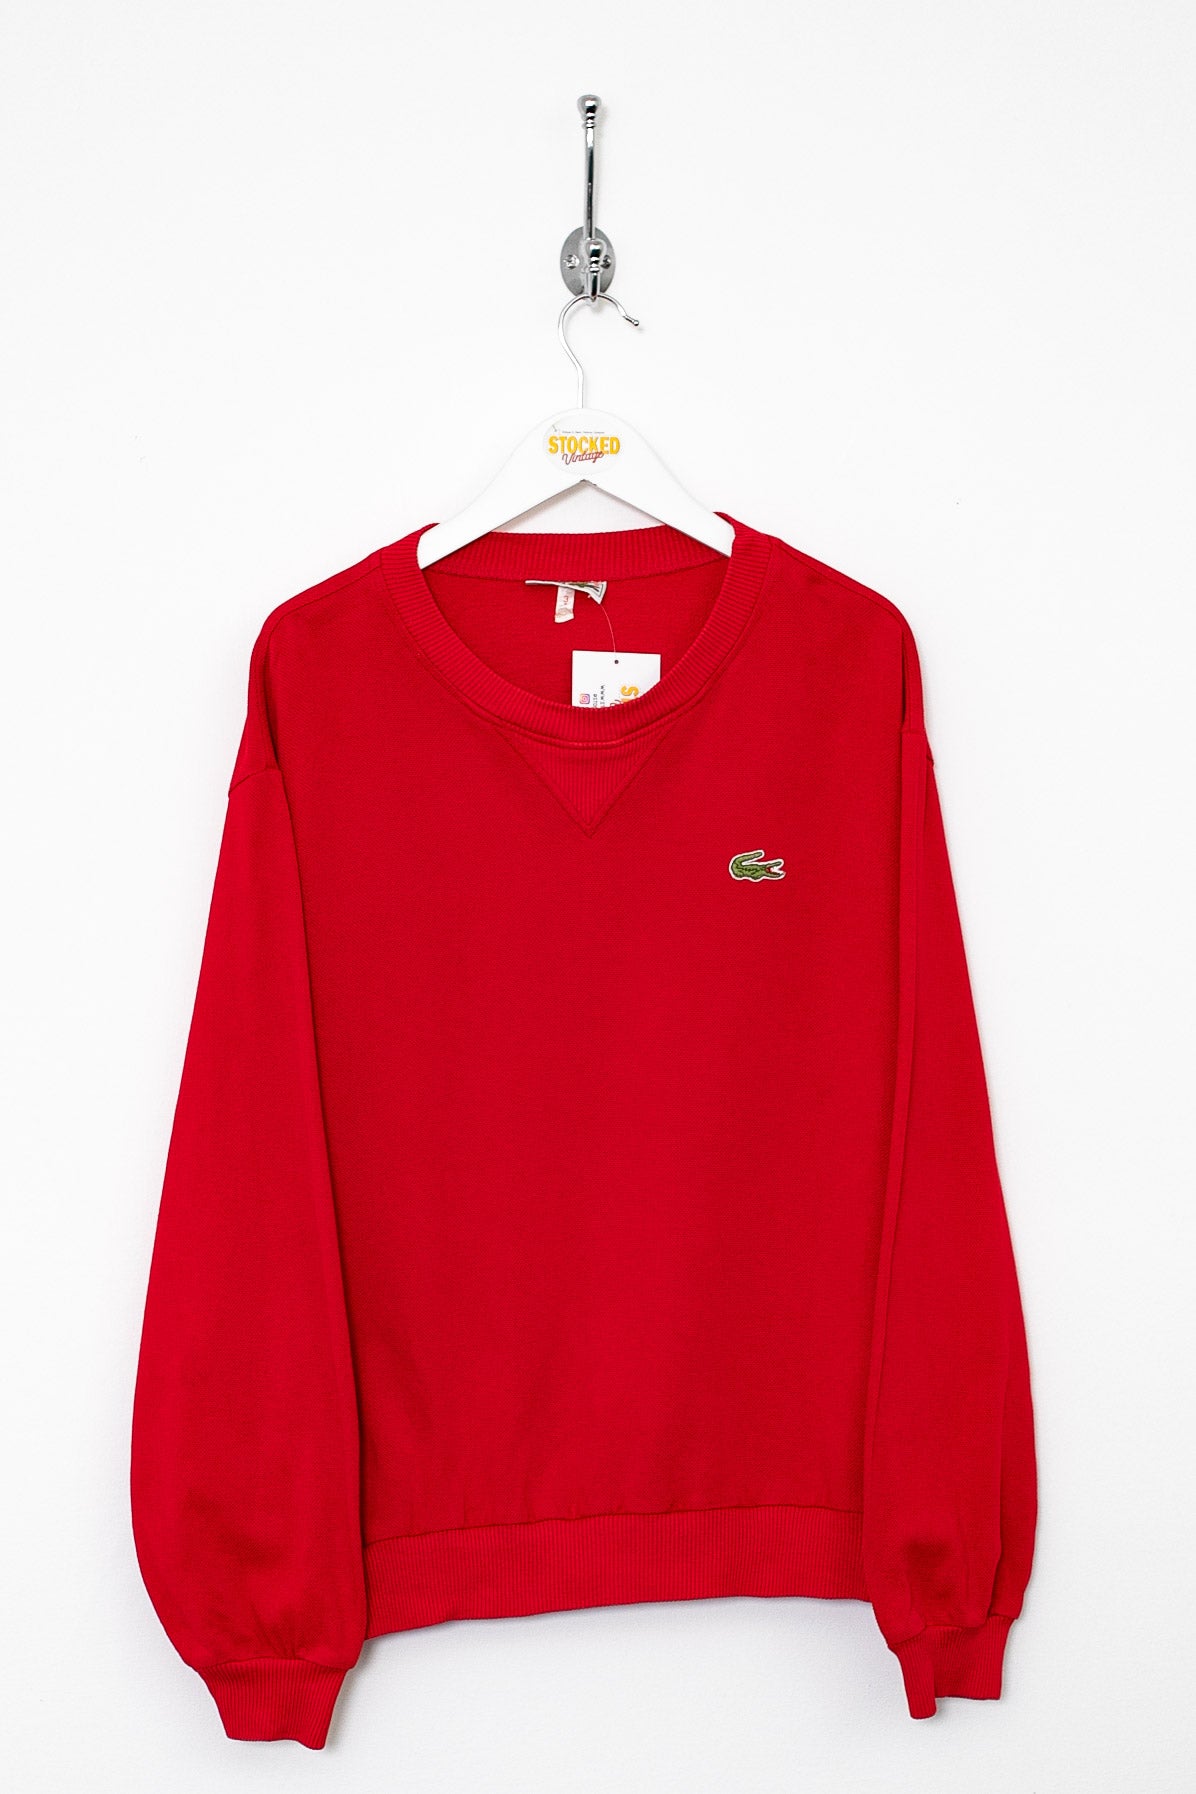 90s Lacoste Sweatshirt (S)